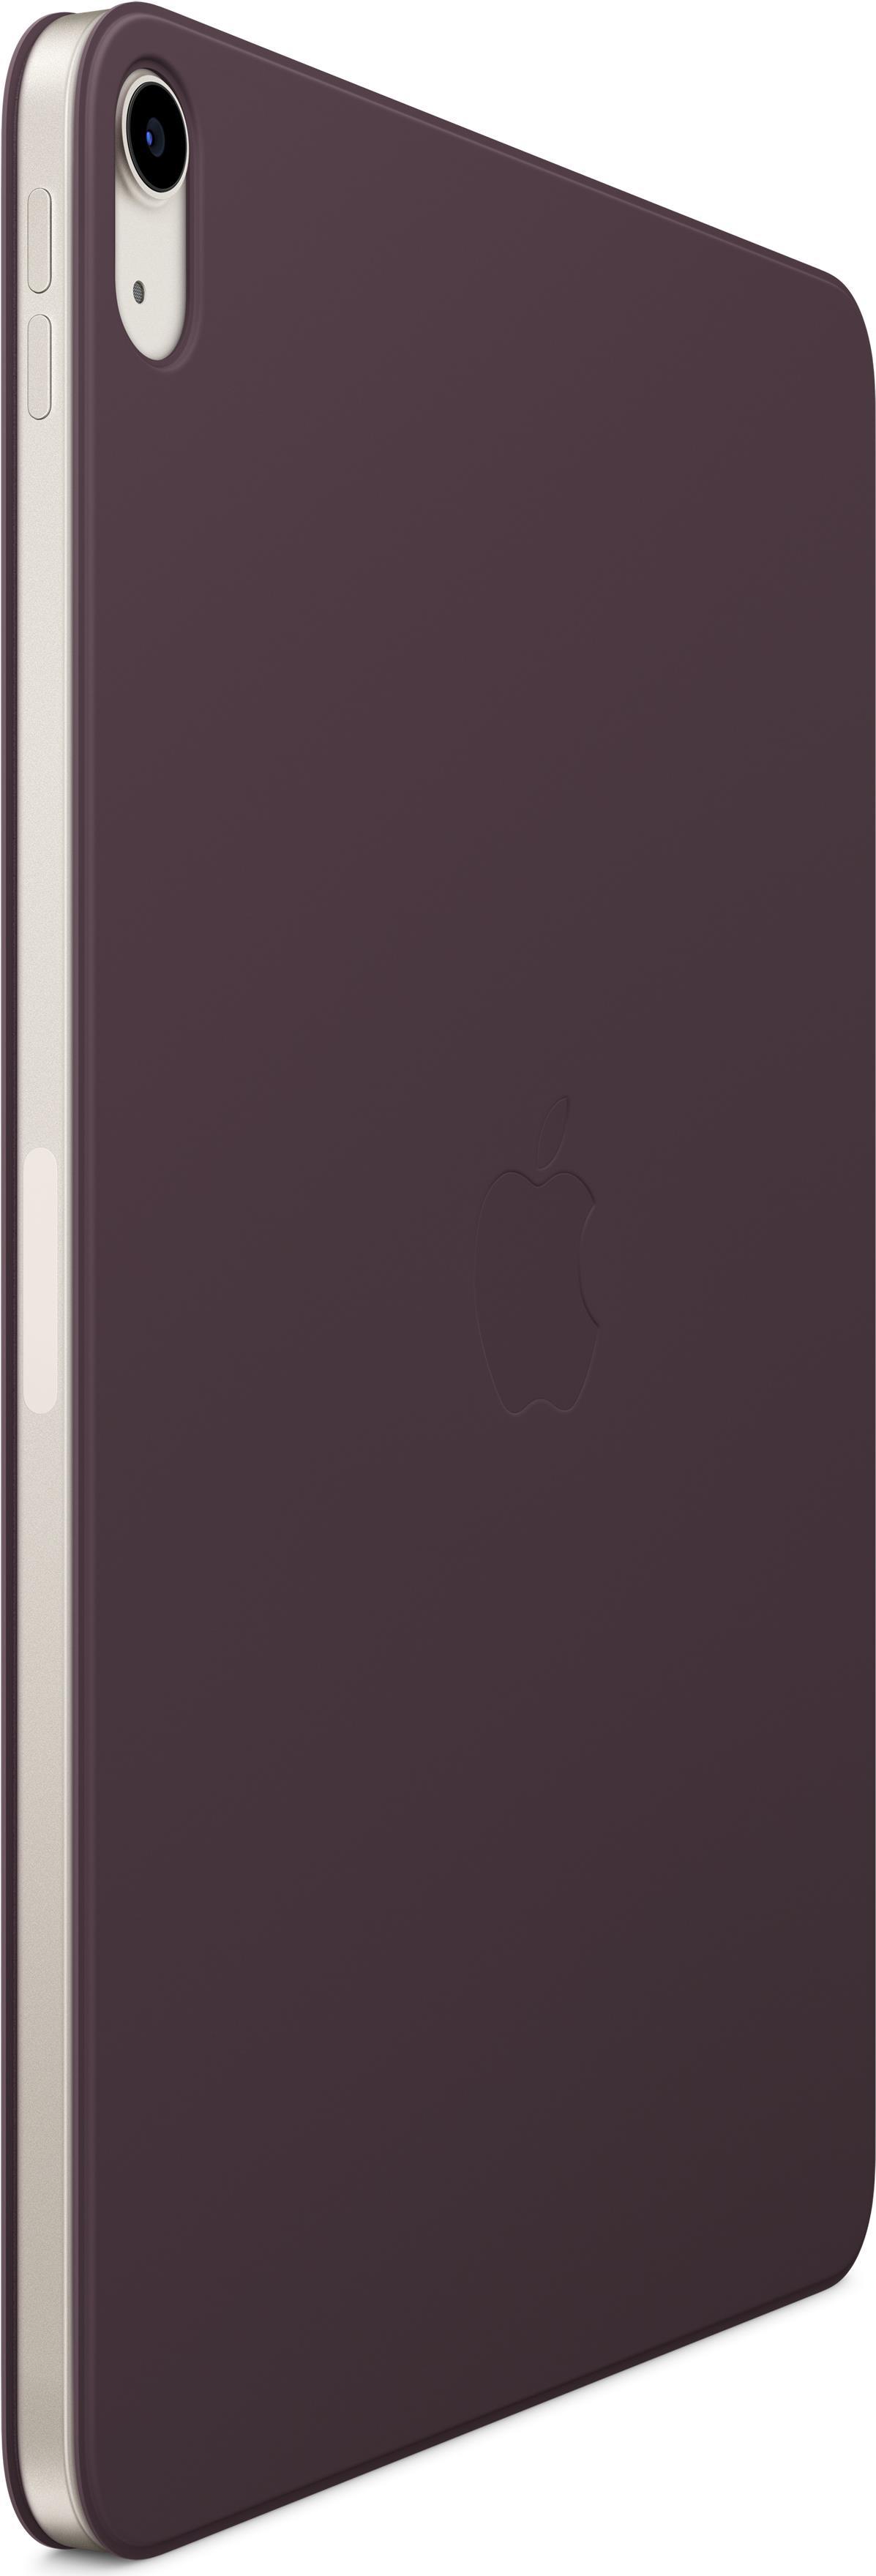 Apple Smart Folio